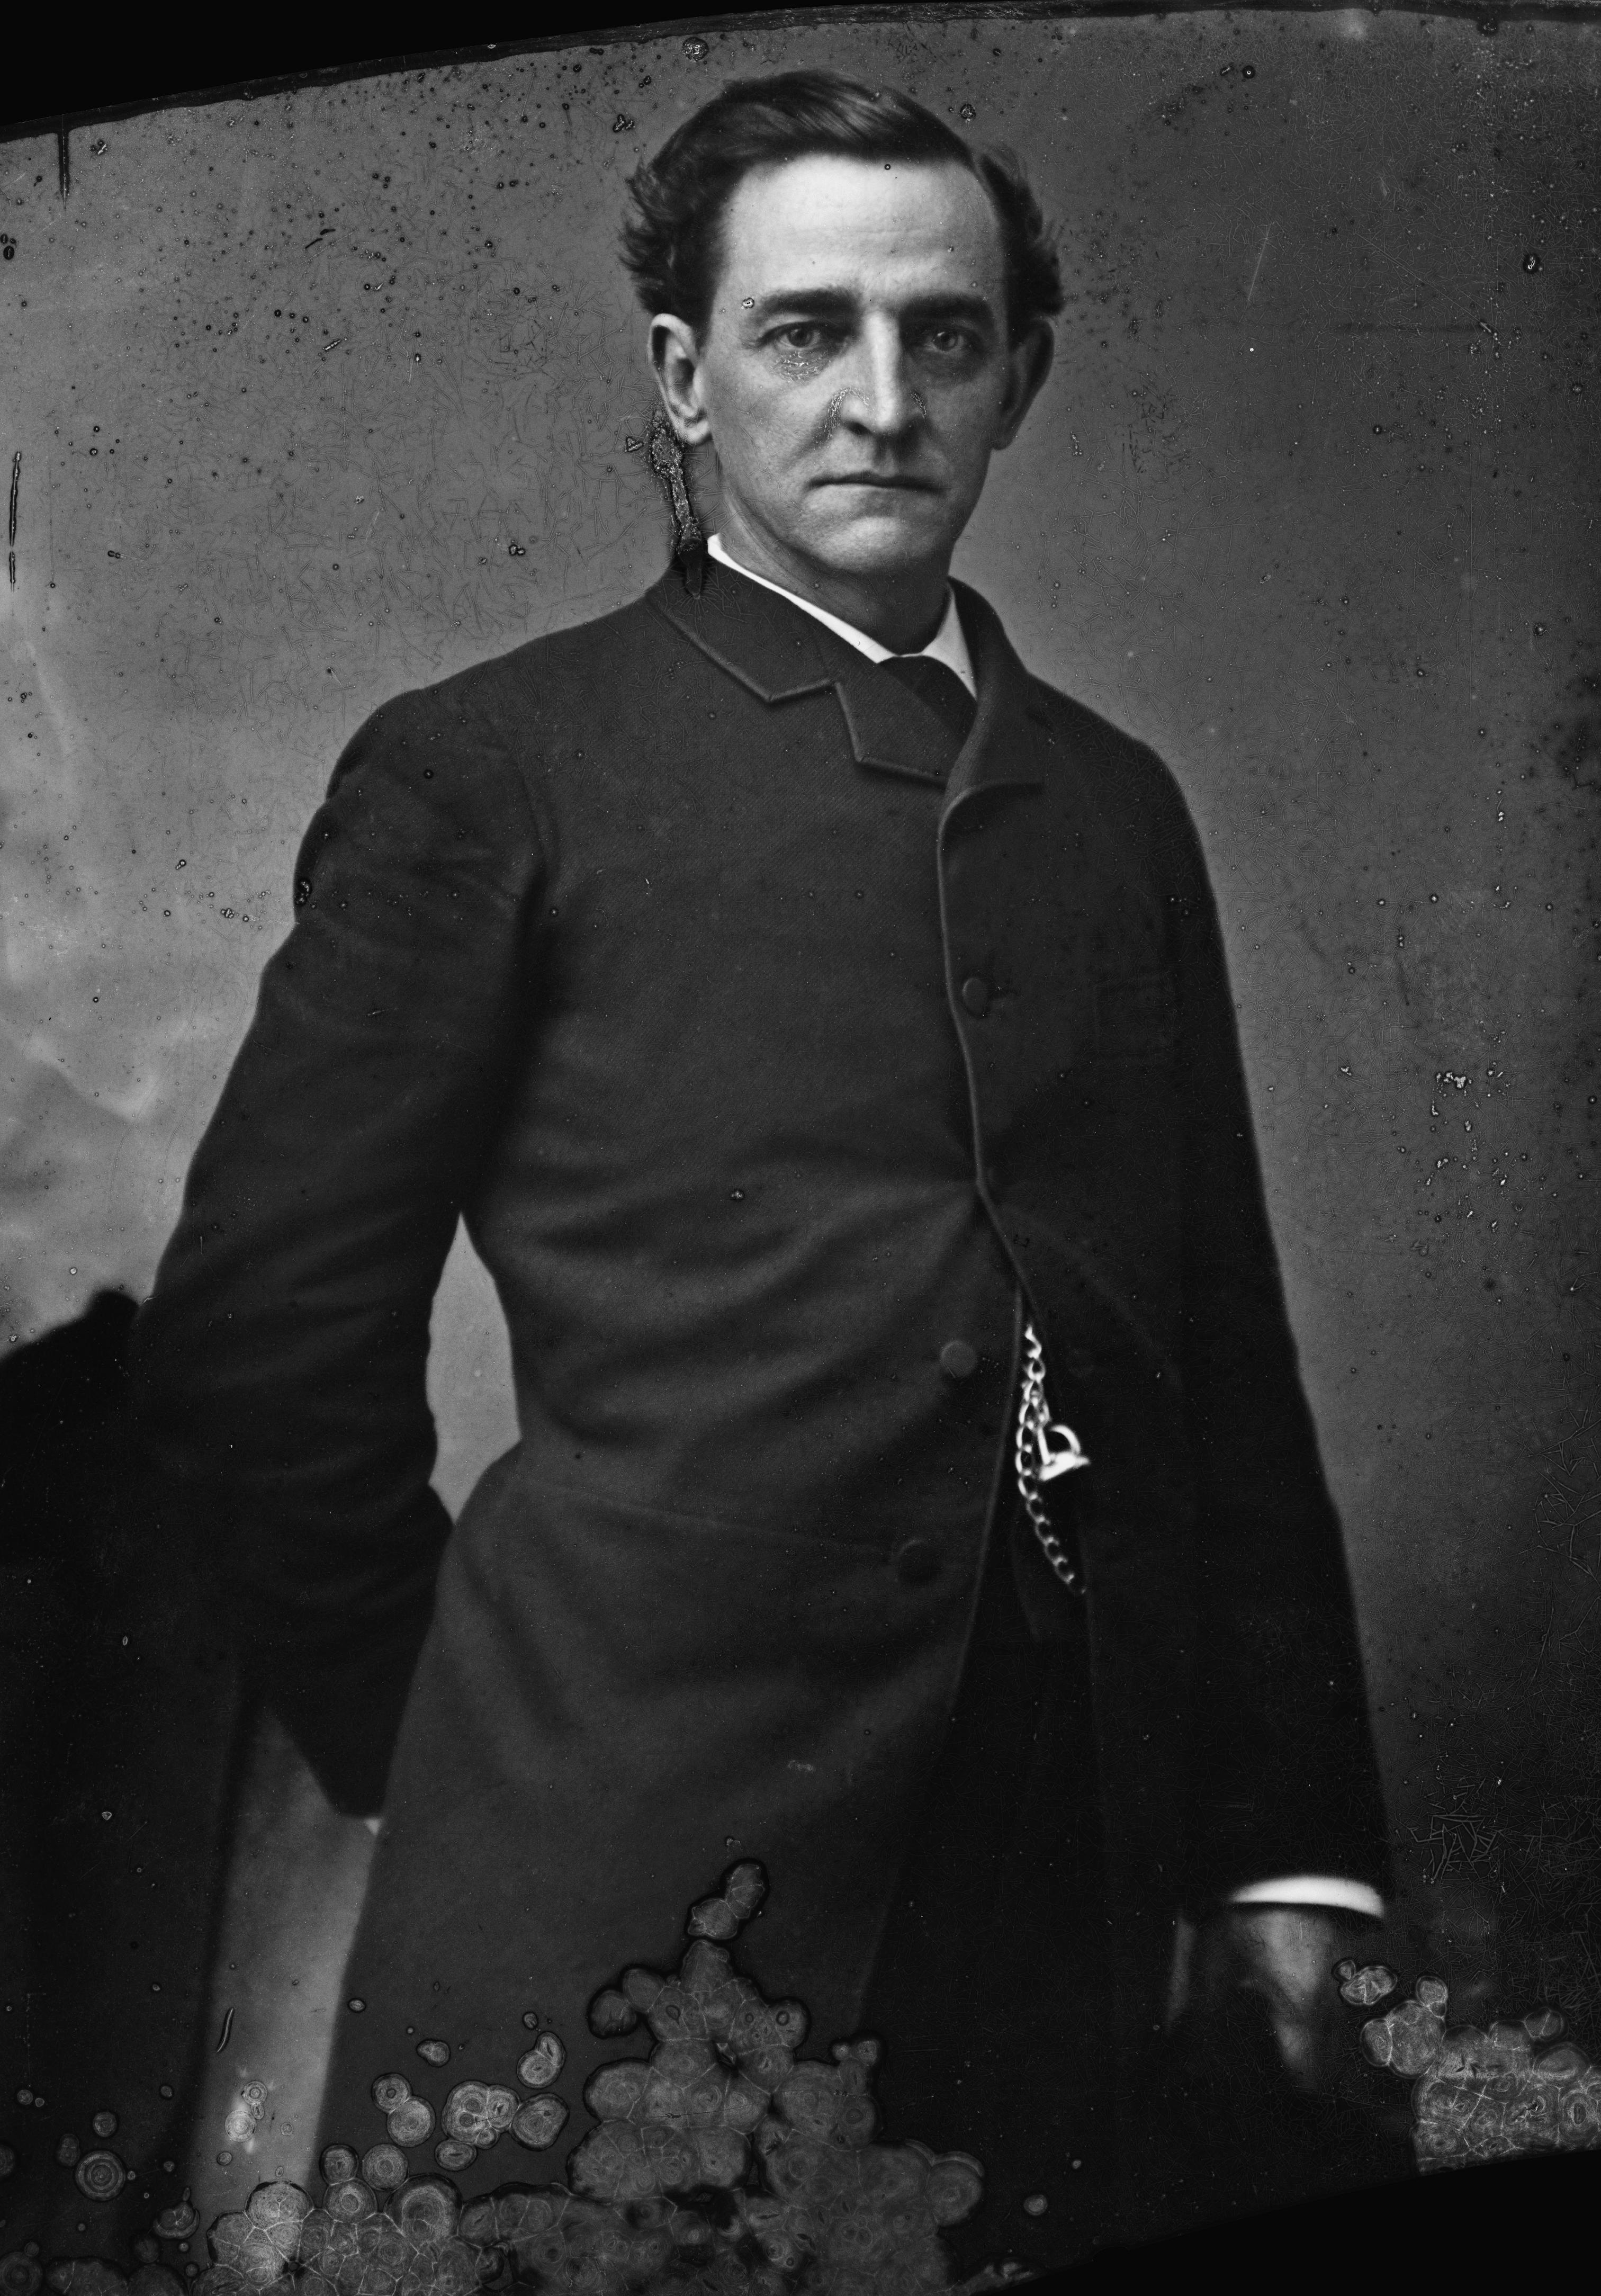 John W. Daniel